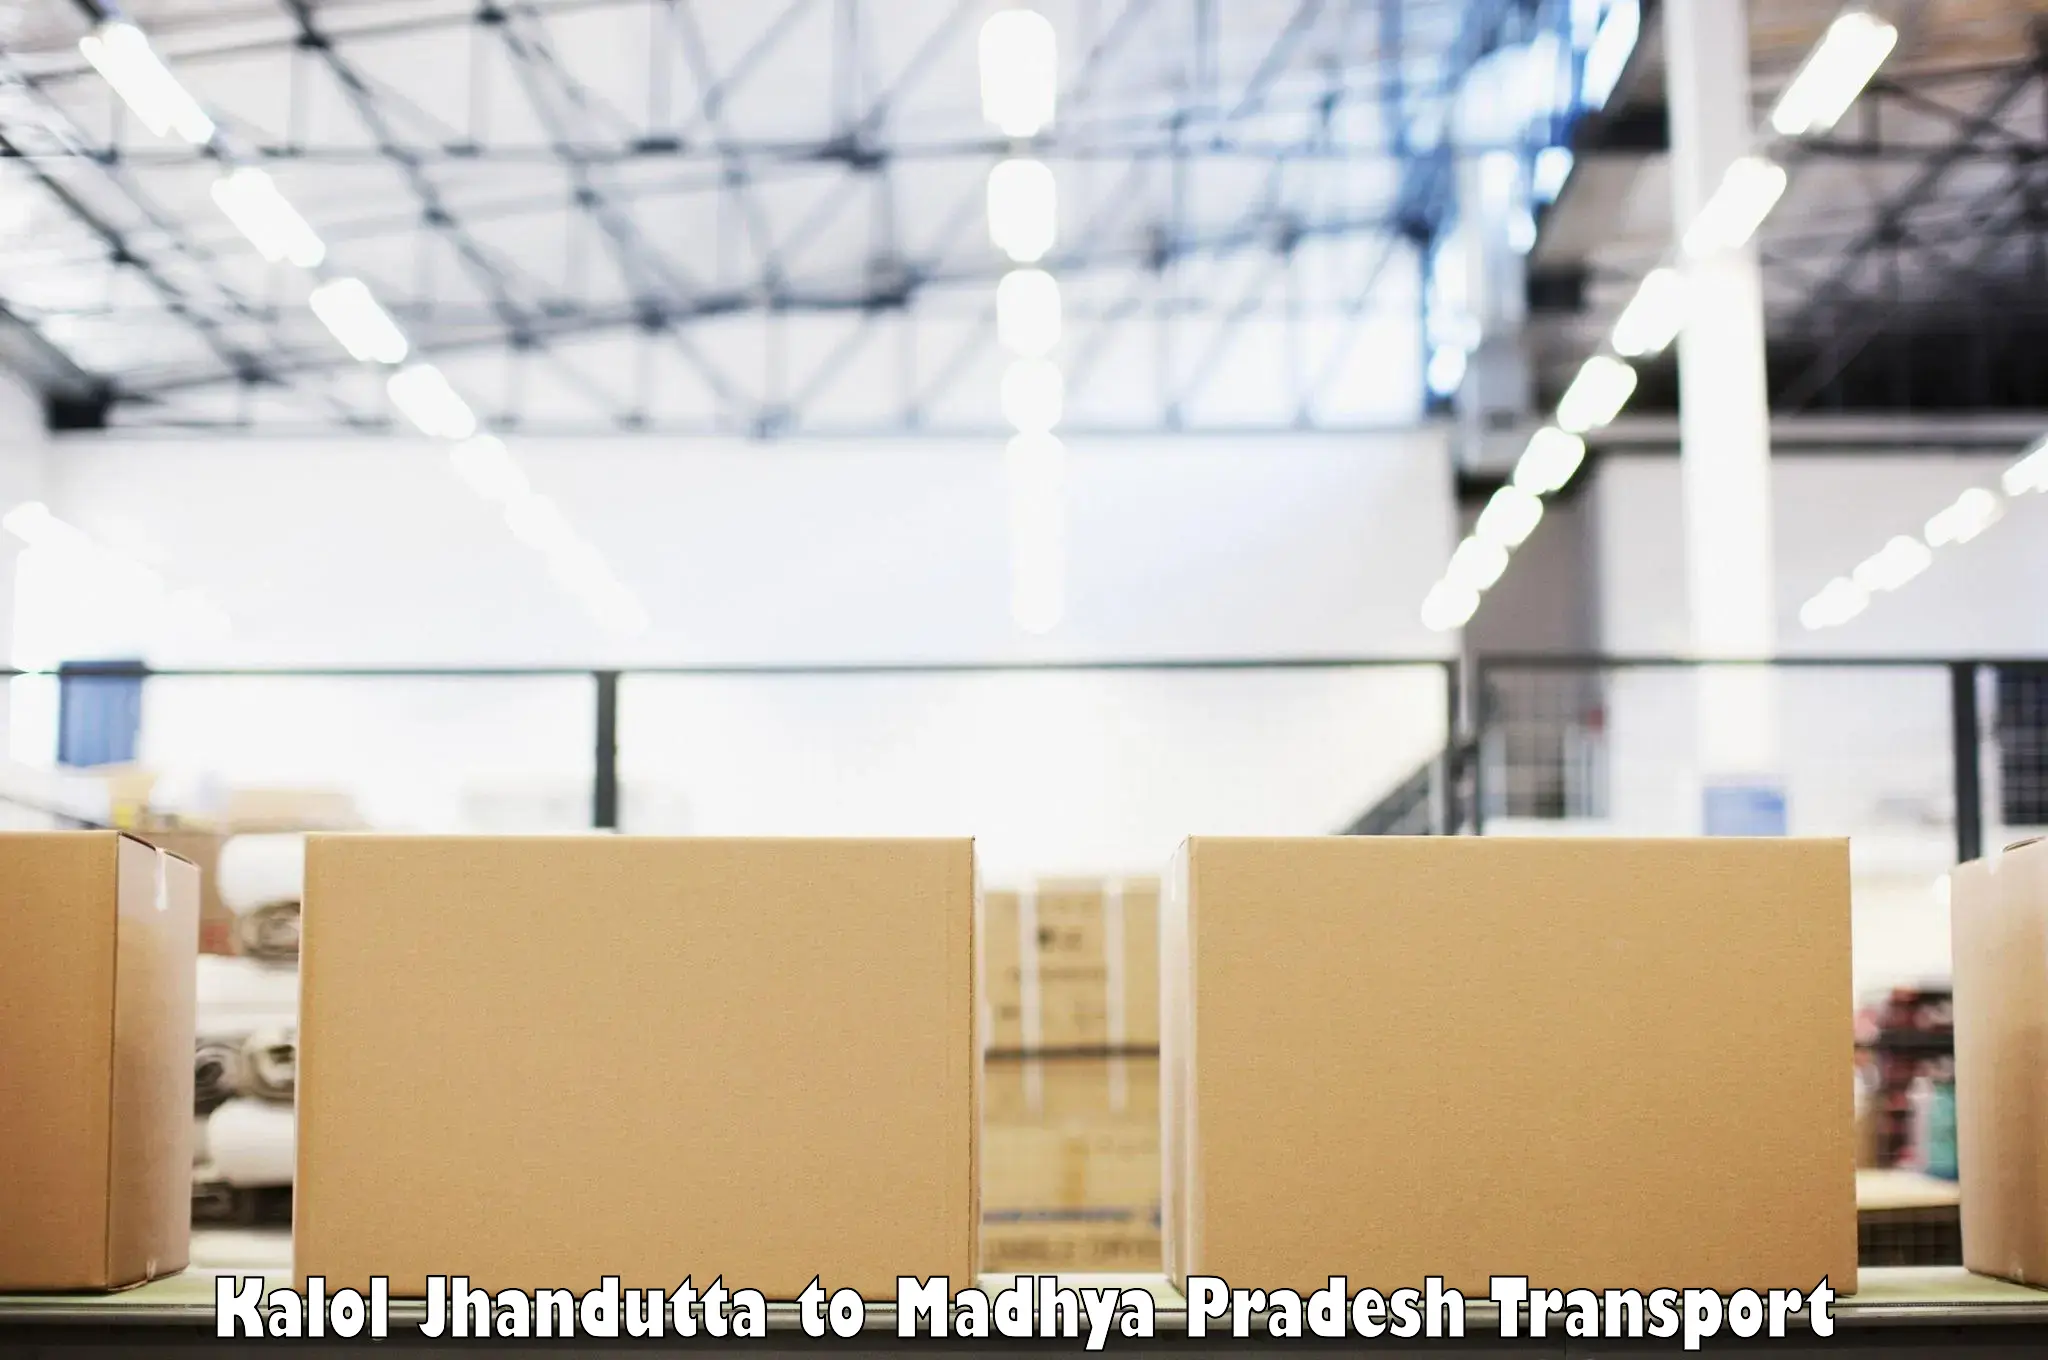 Goods delivery service Kalol Jhandutta to Chandla